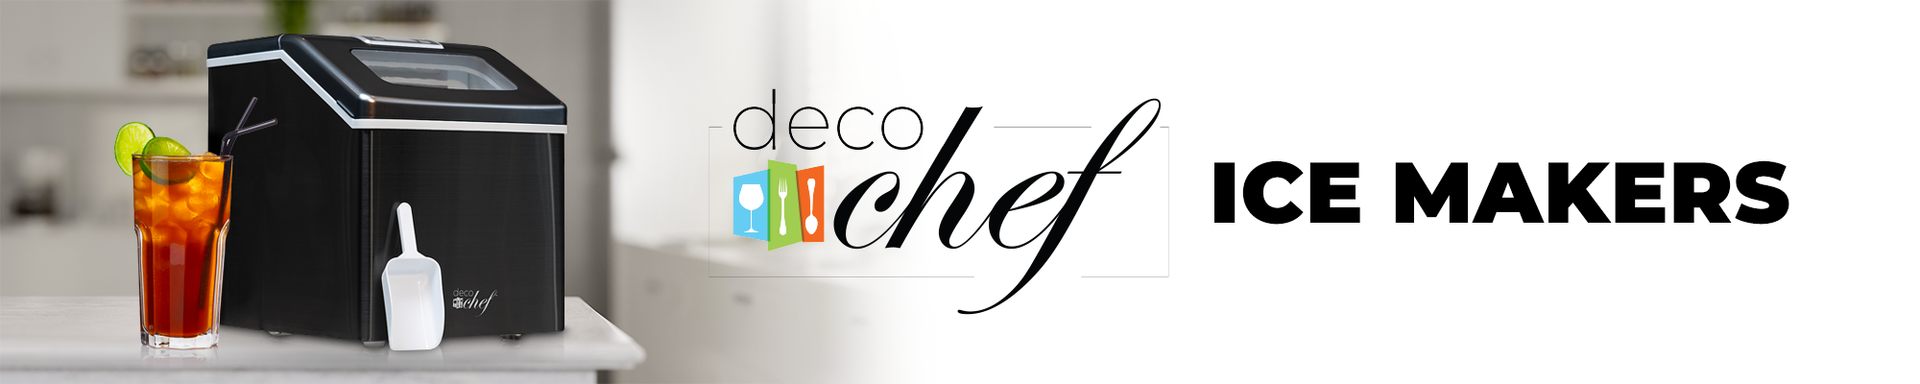 Deco Chef 46LB Self Dispensing Nugget Ice Maker, Countertop, Makes